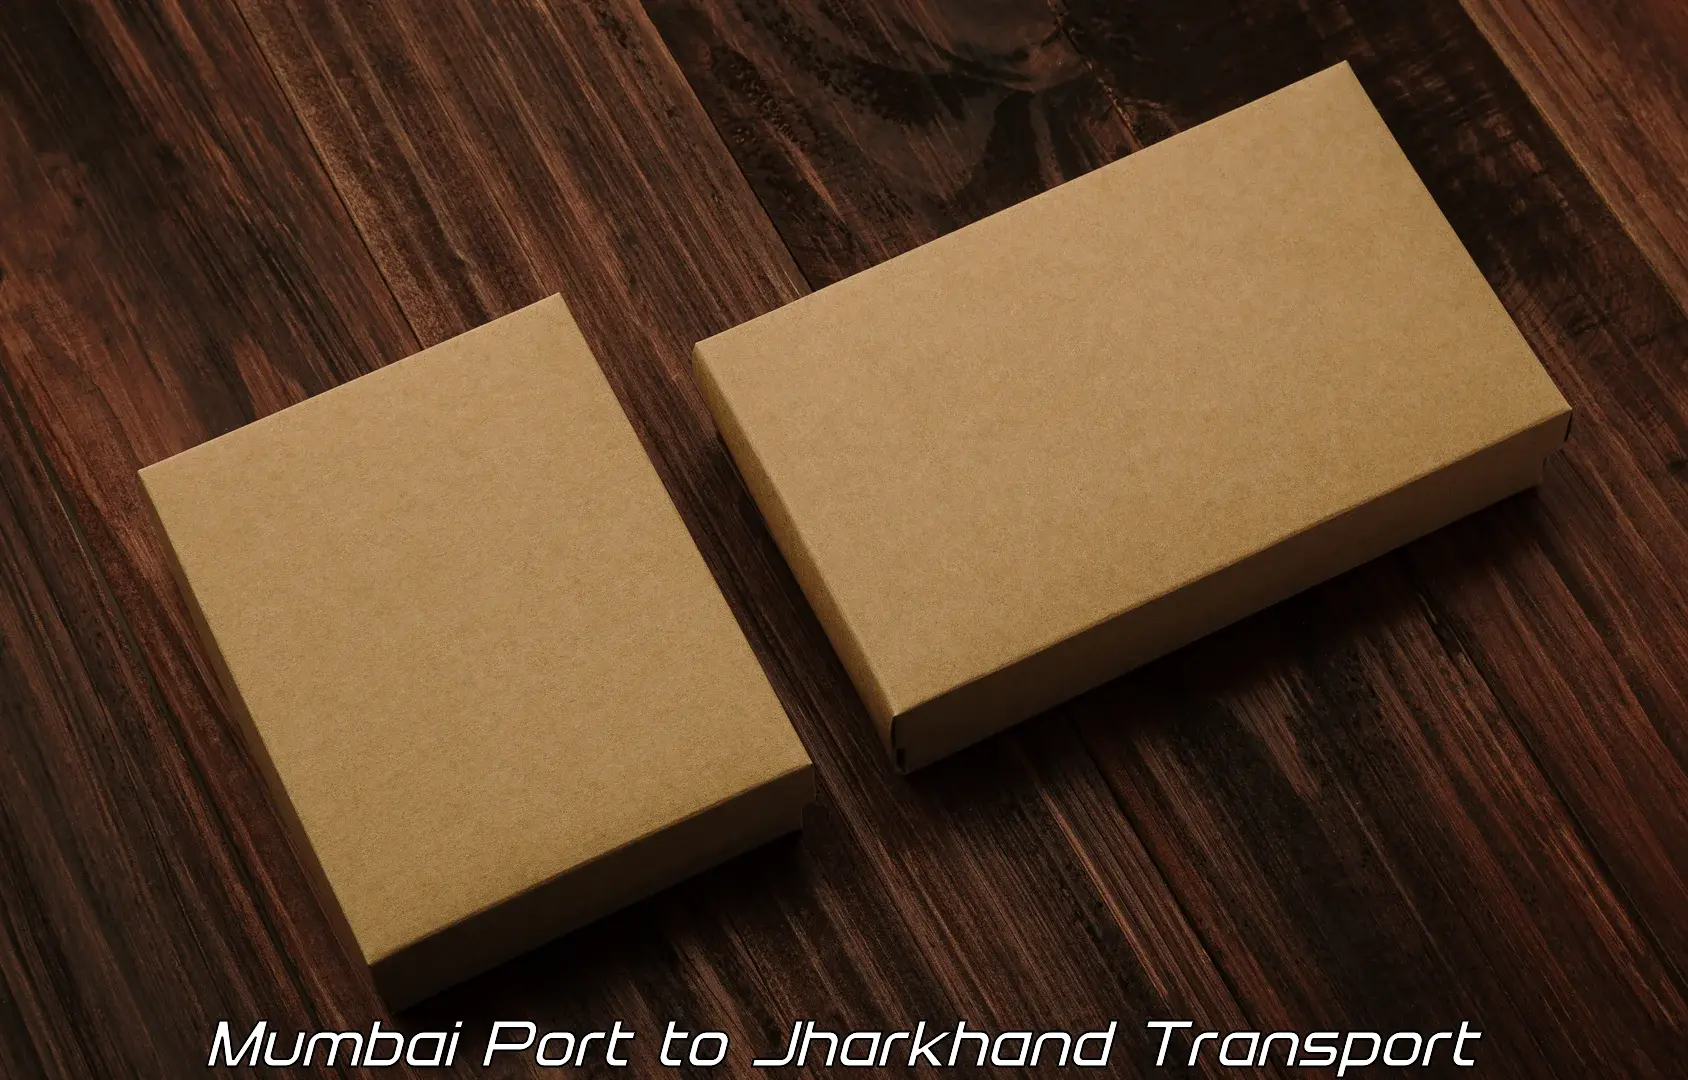 Transport shared services in Mumbai Port to Shikaripara